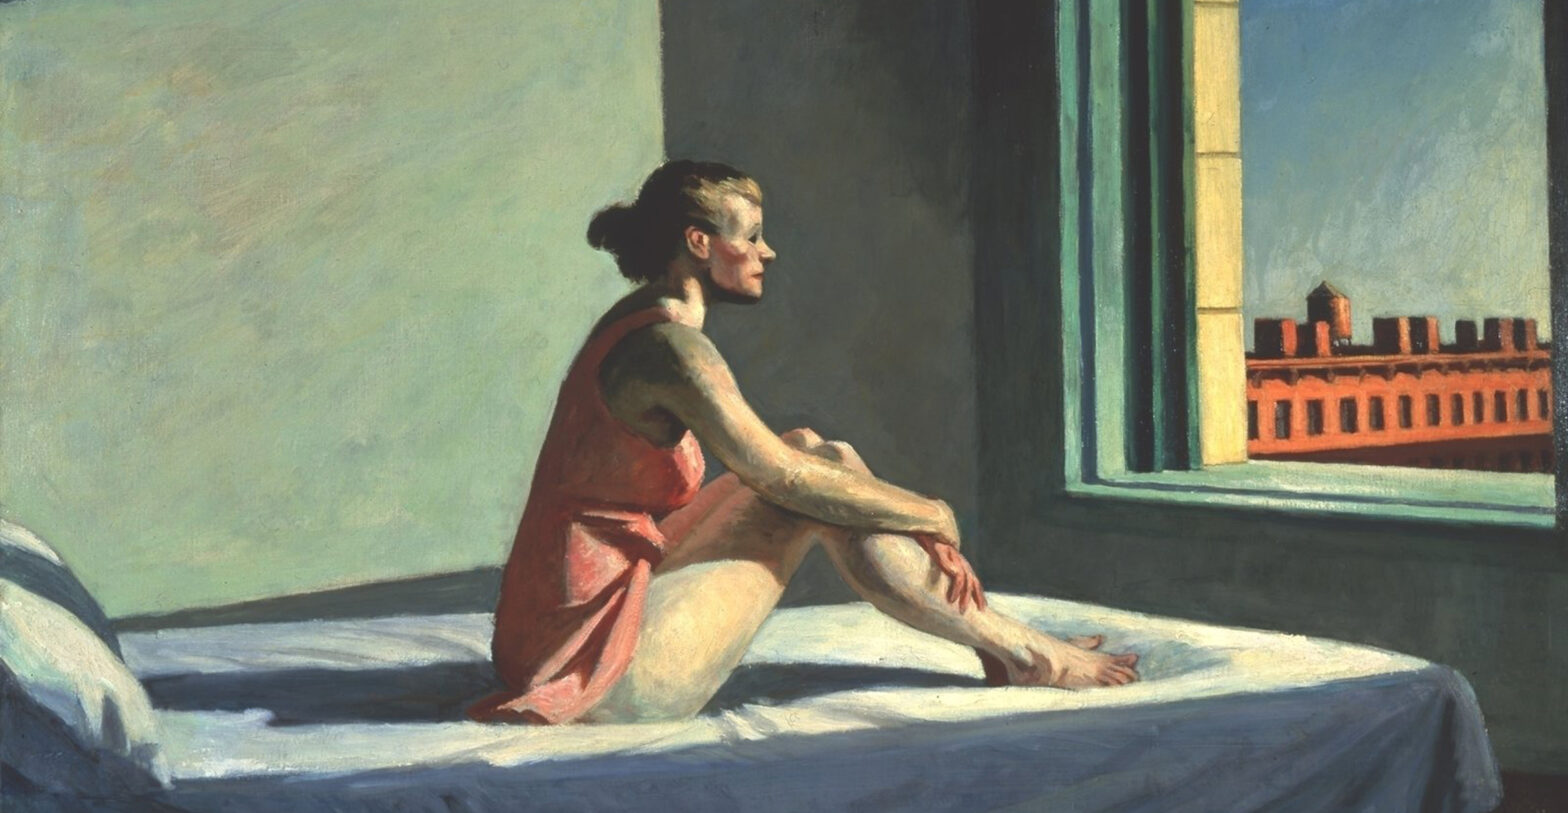 Edward Hopper, Morning Son, oil on canvas, 1954